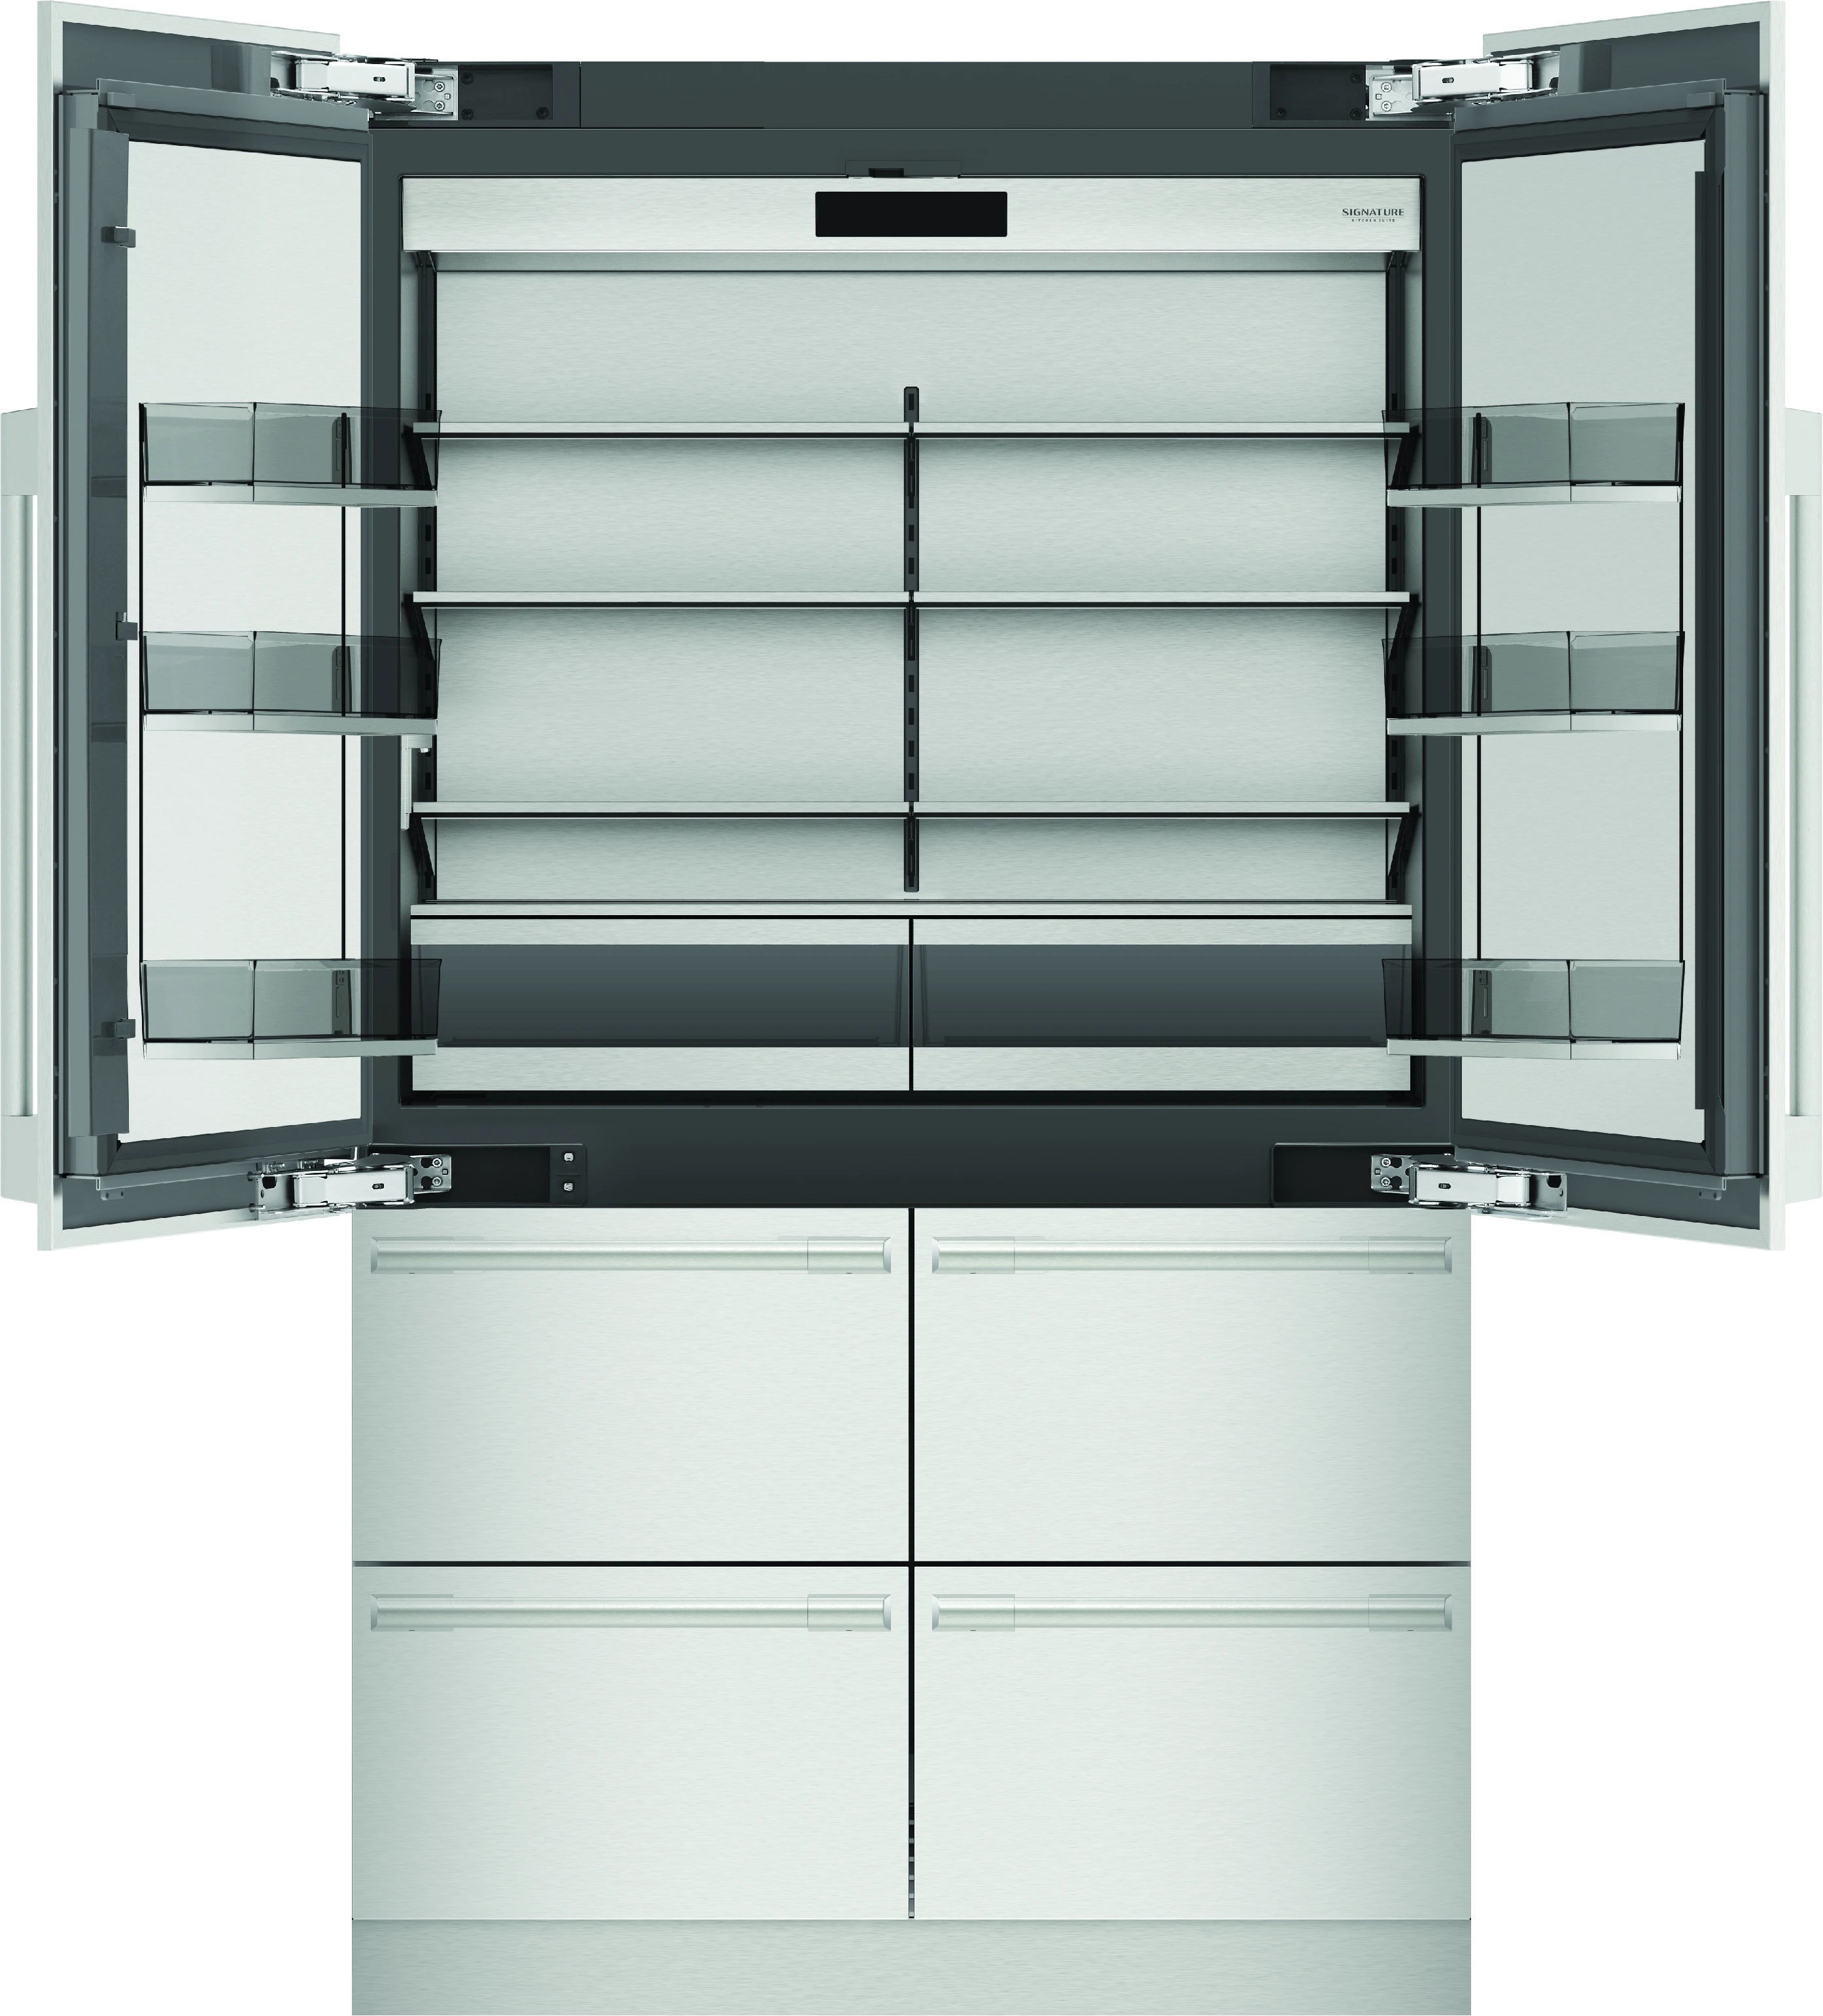 SKS_48-inch_French_Door_Refrigerator